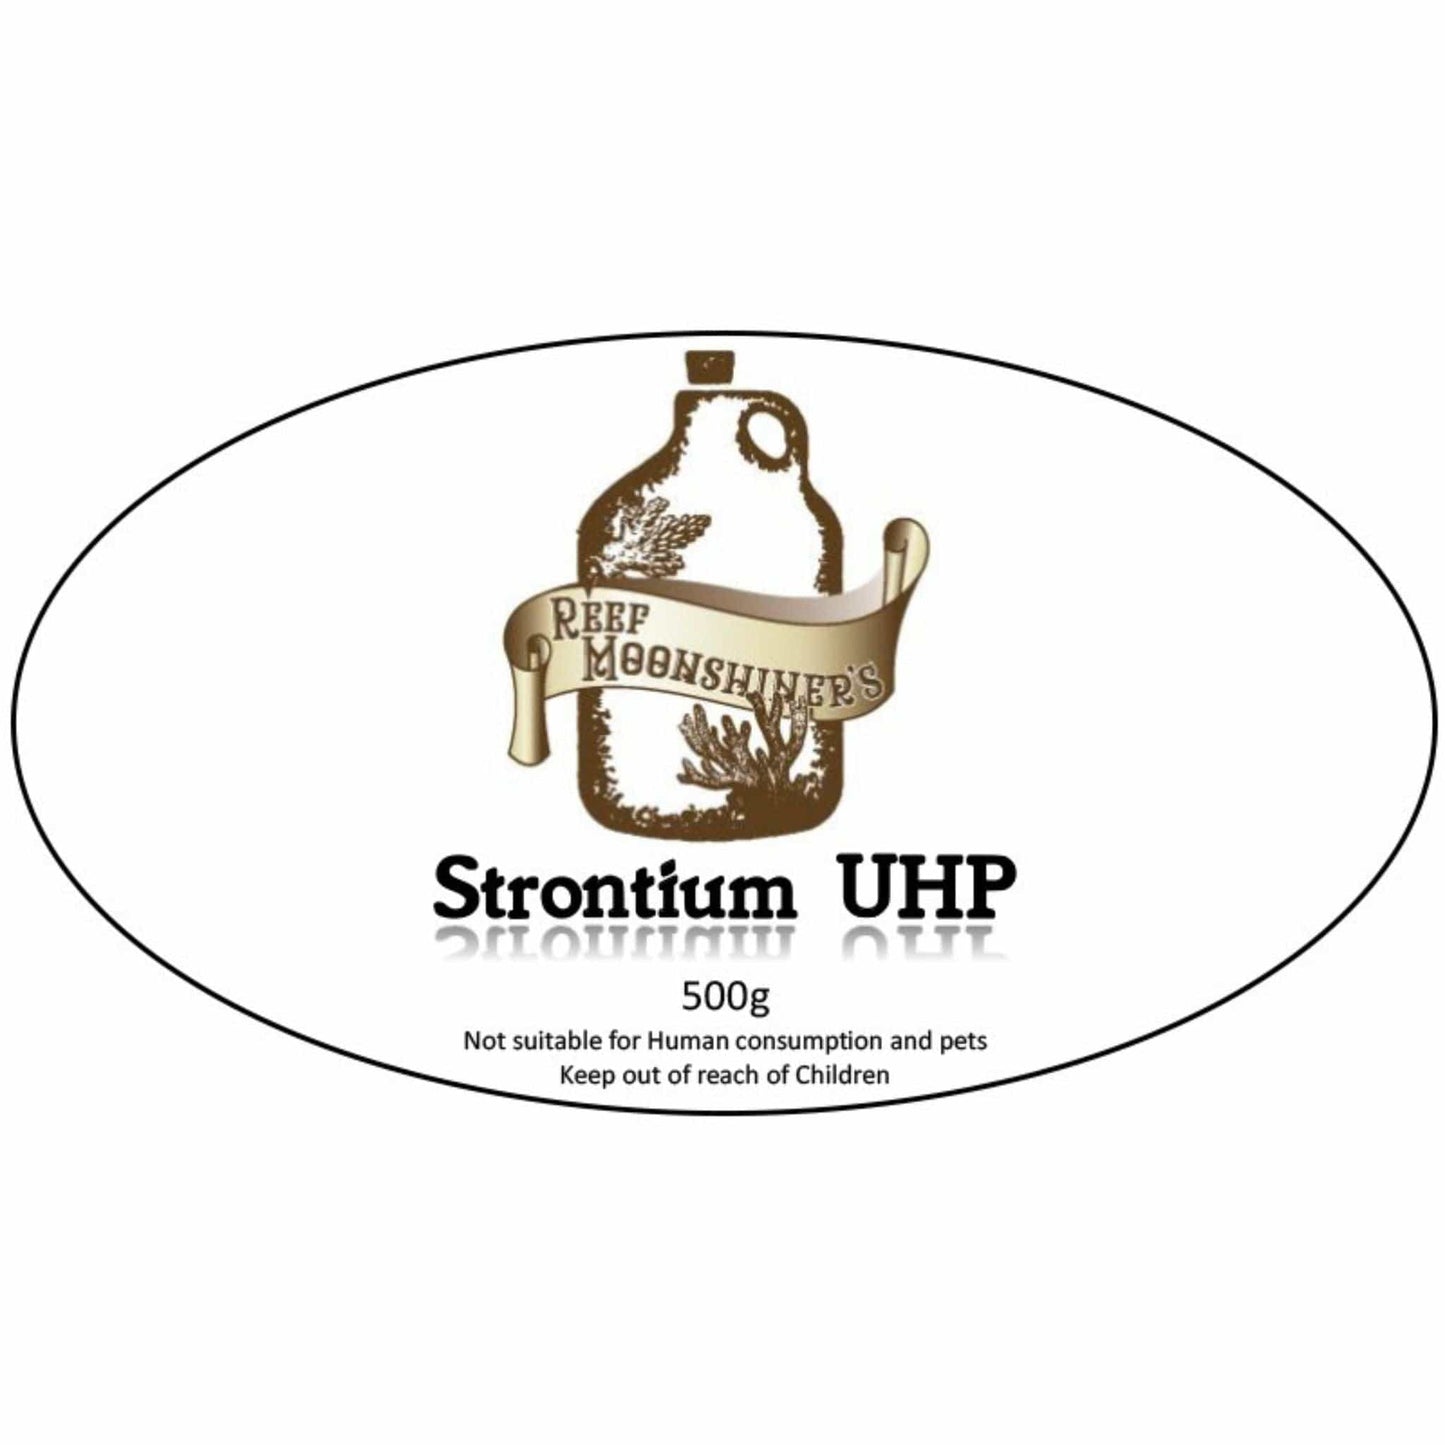 Reef Moonshiner's - Strontium UHP